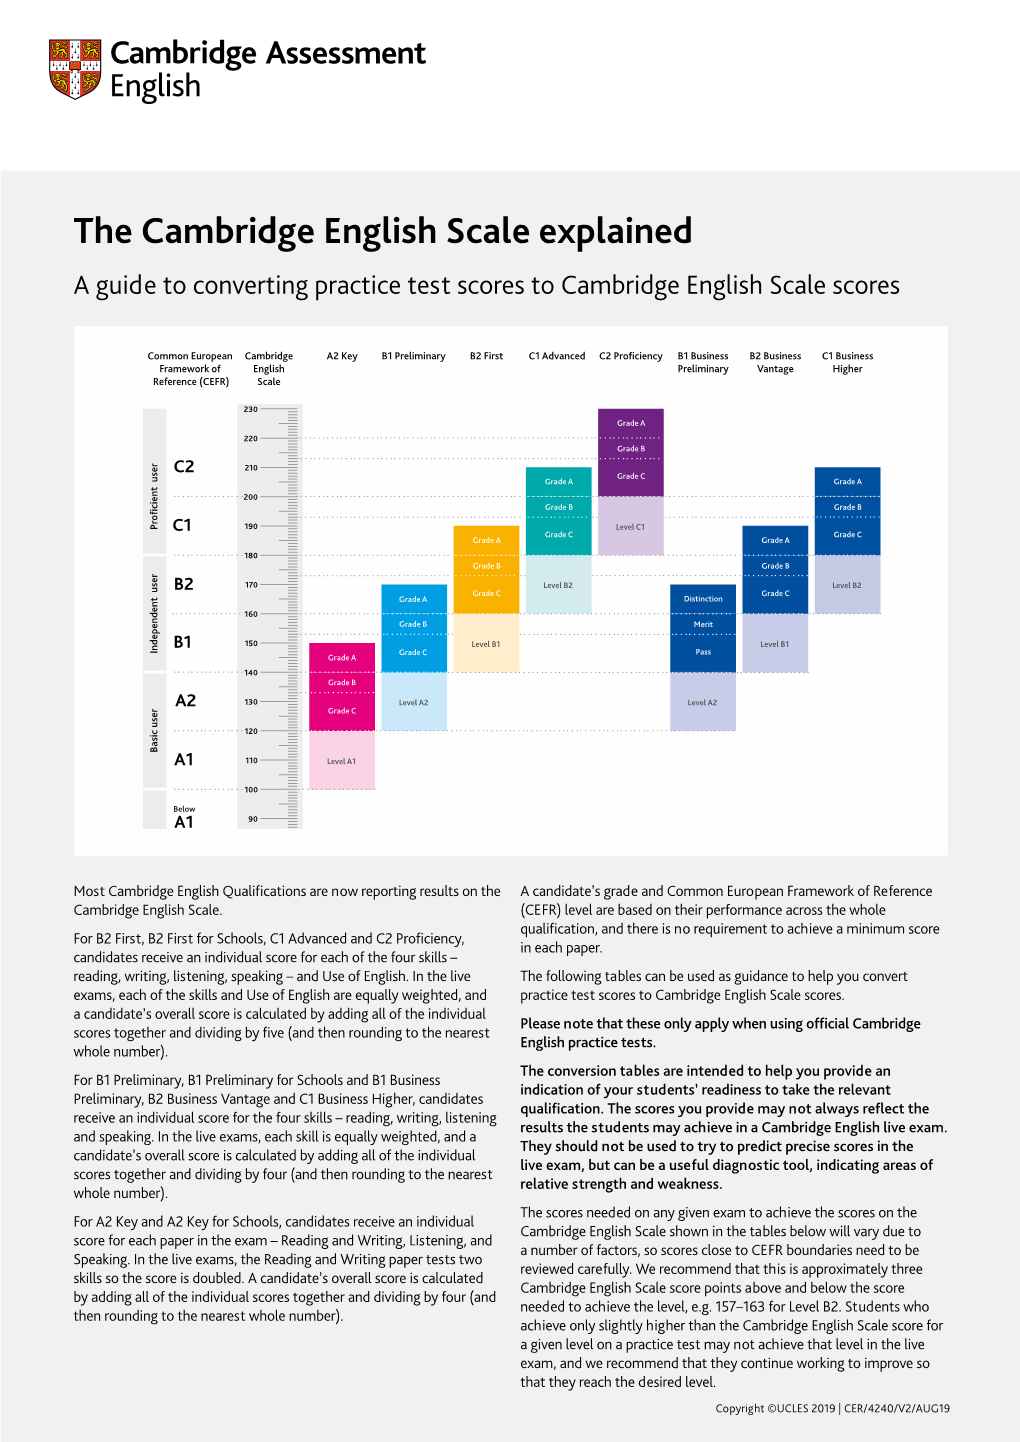 Converting Practice Test Scores to Cambridge English Scale Scores